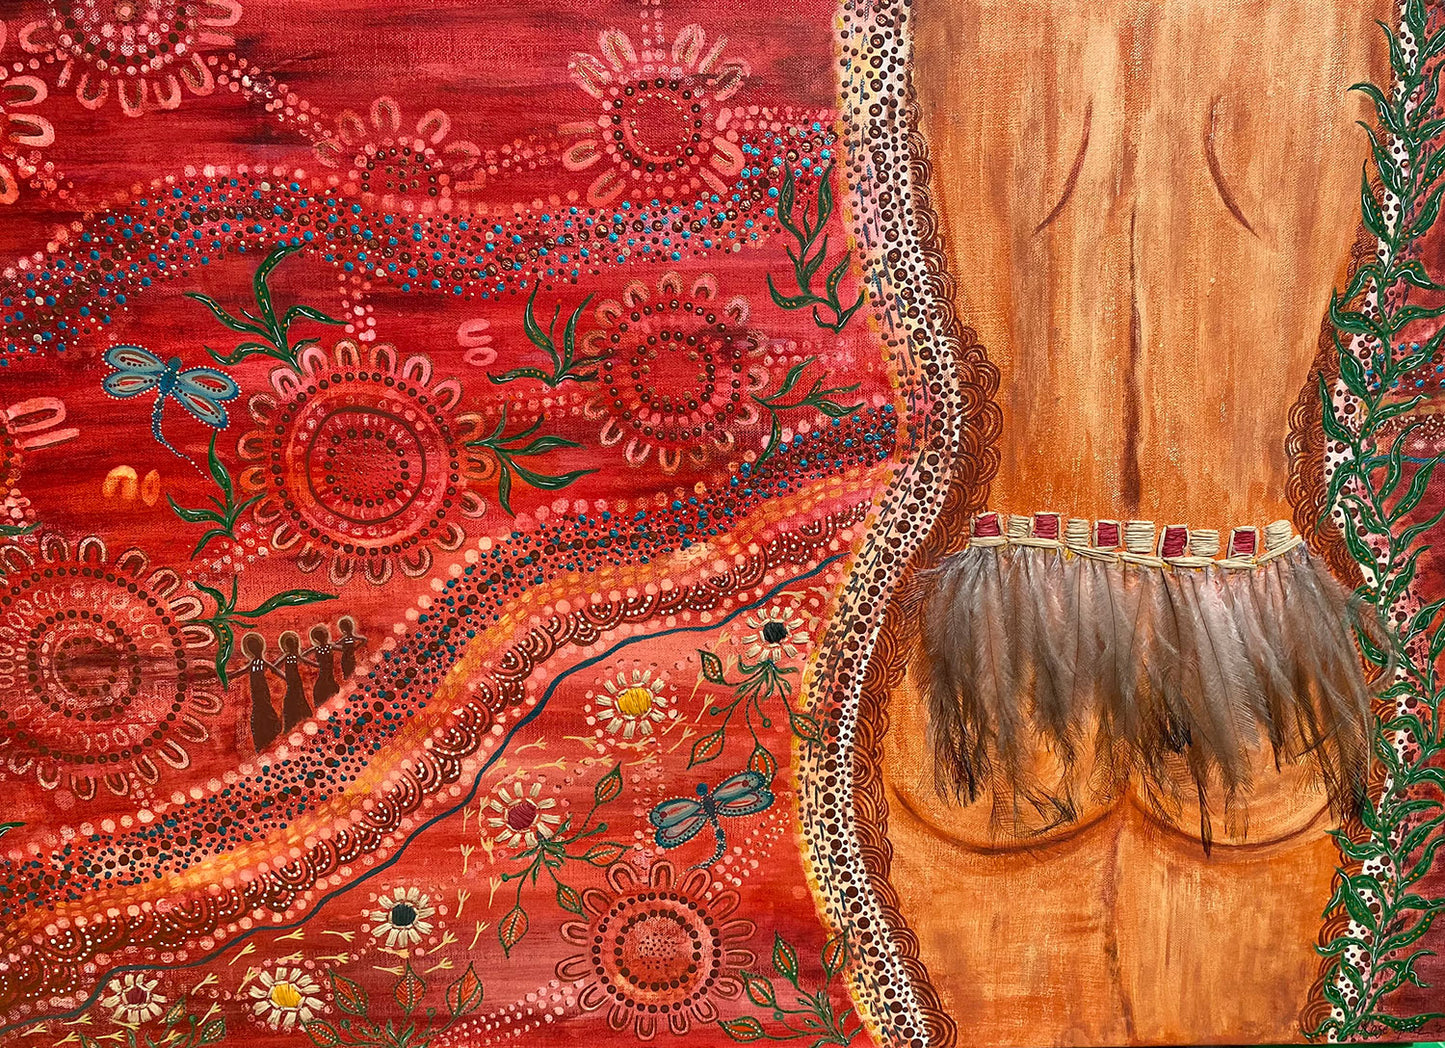 A Womans Journey by Wiradjuri Artist Rose Grae